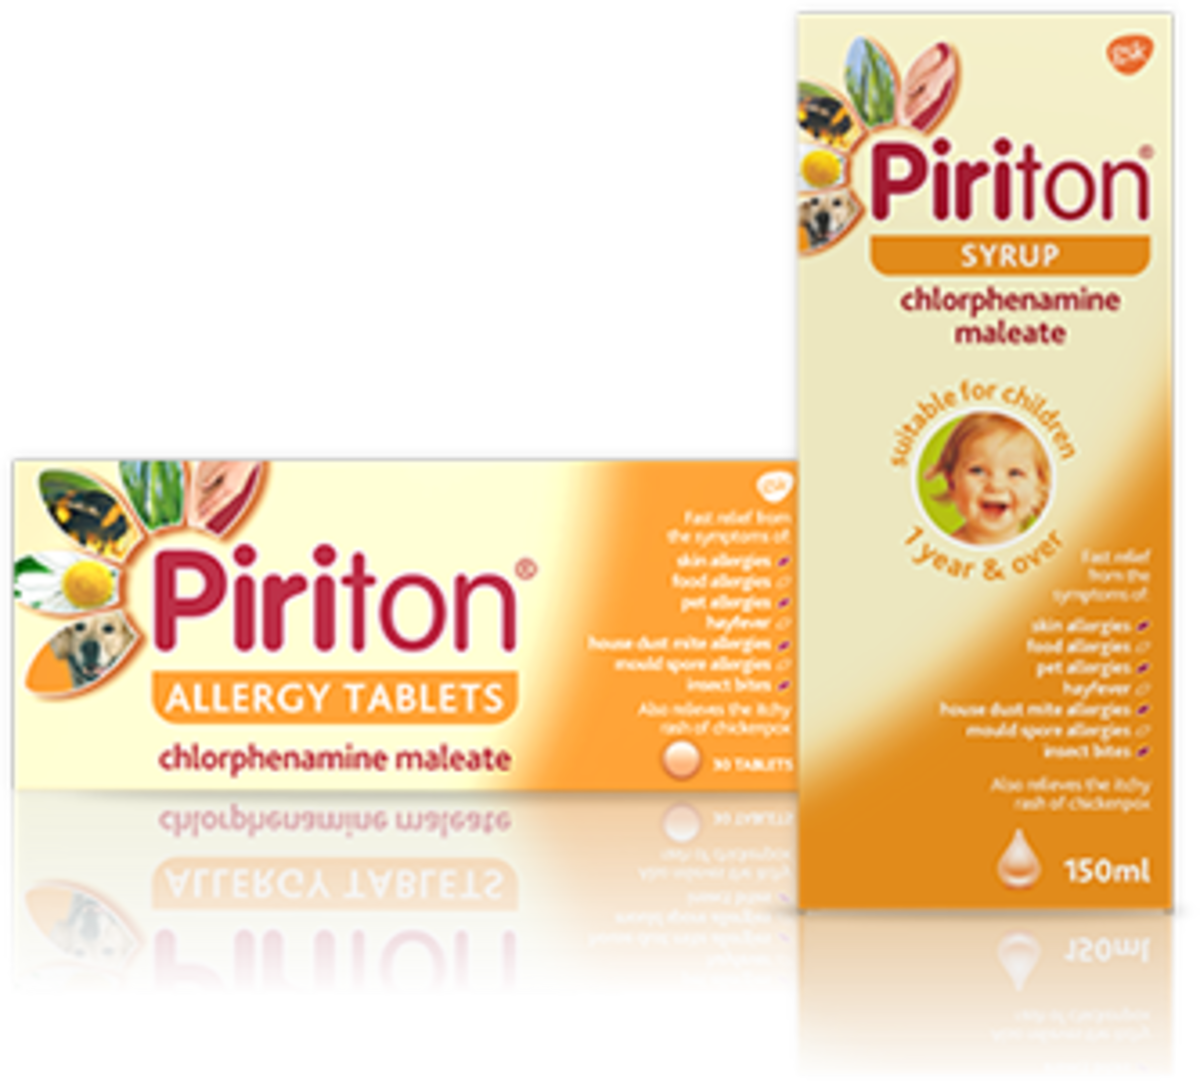 Piriton is a common antihistamine medication use to treat Nasal Congestion